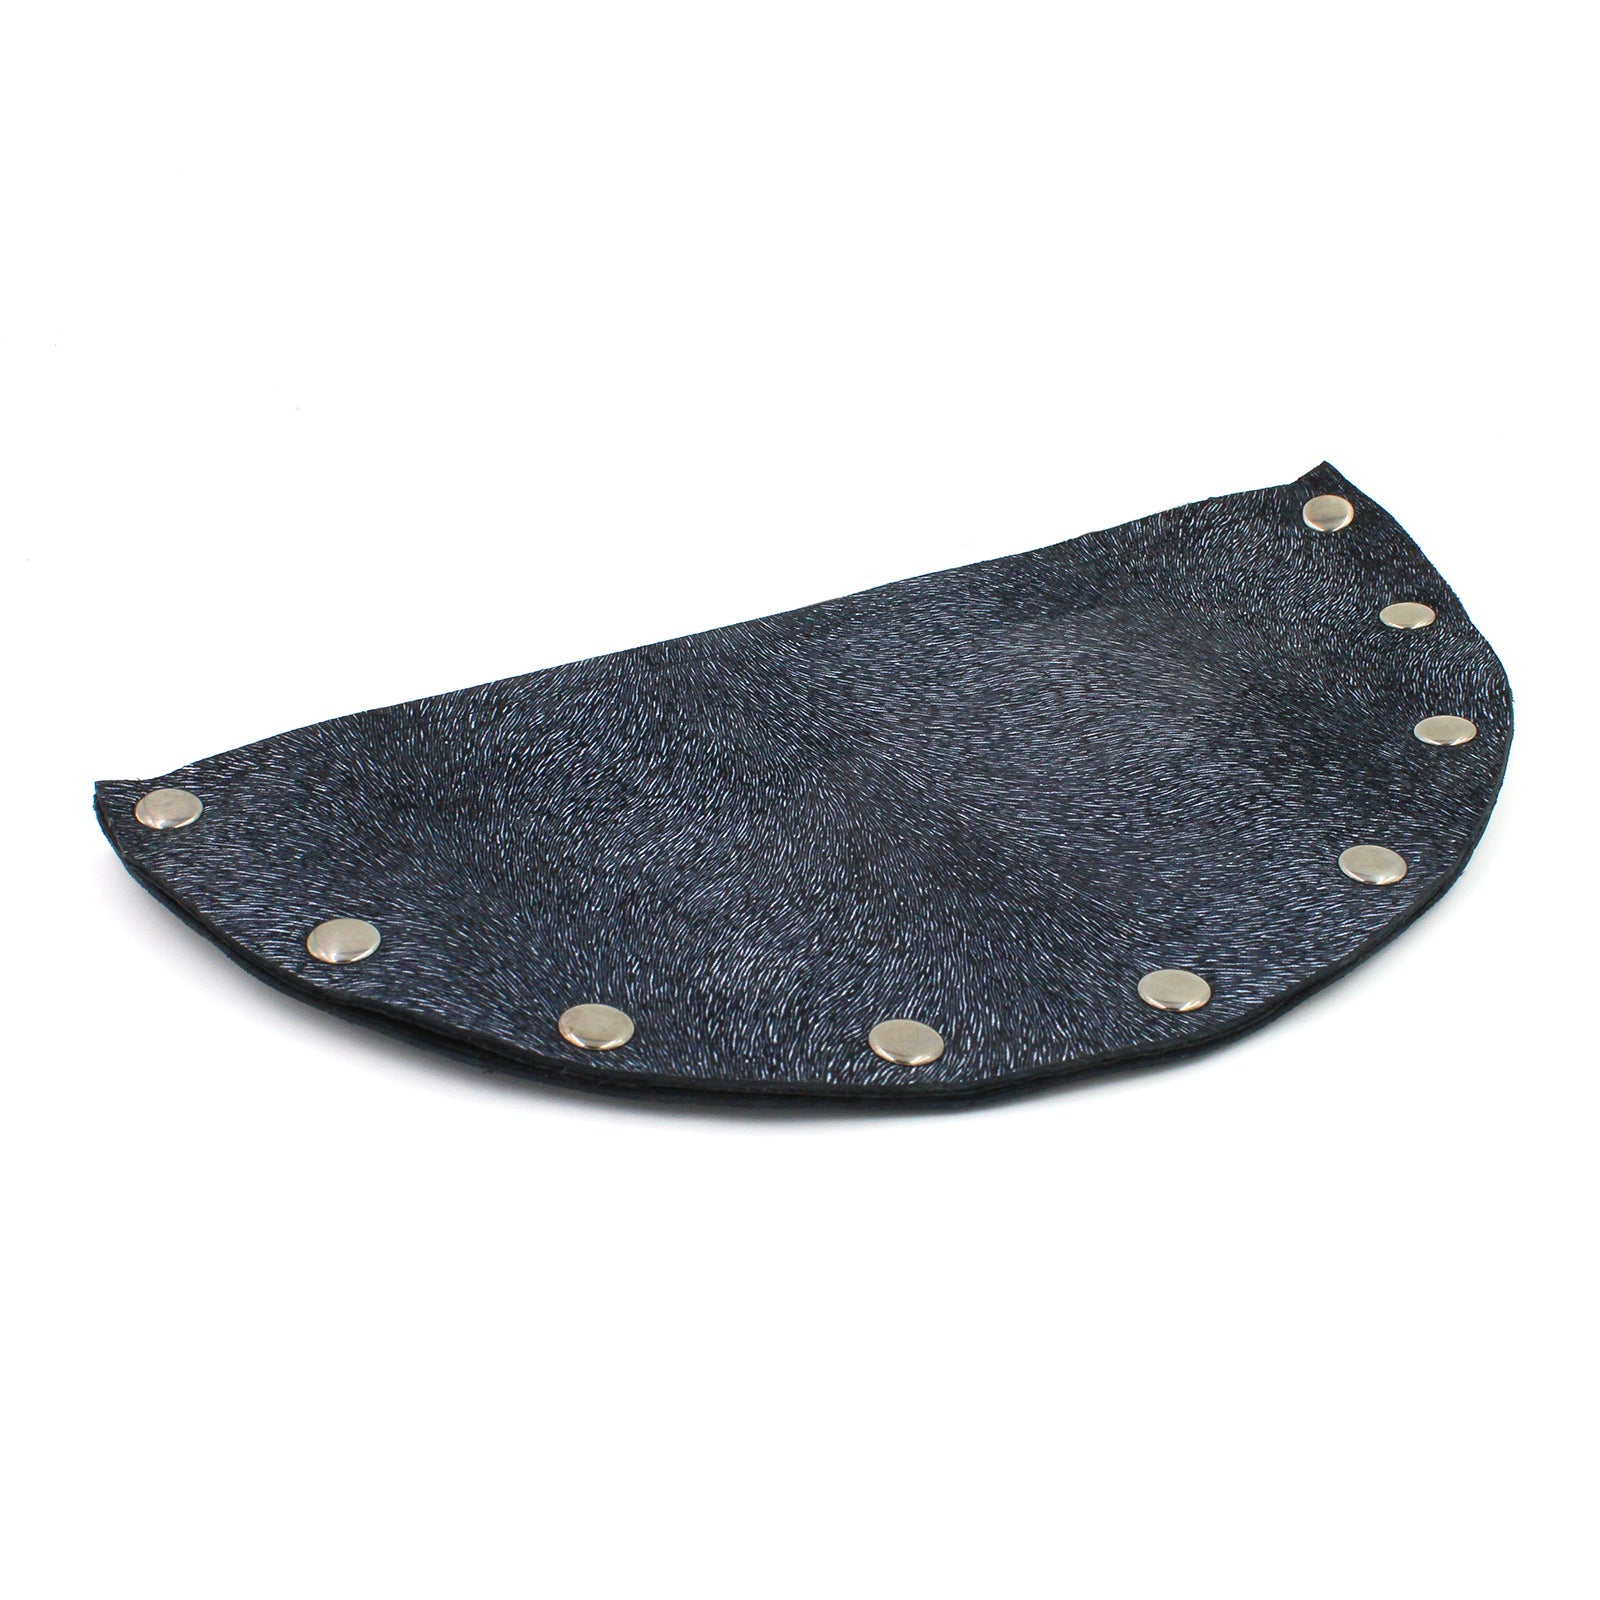 Handmade Navy Blue Half Moon Leather Clutch